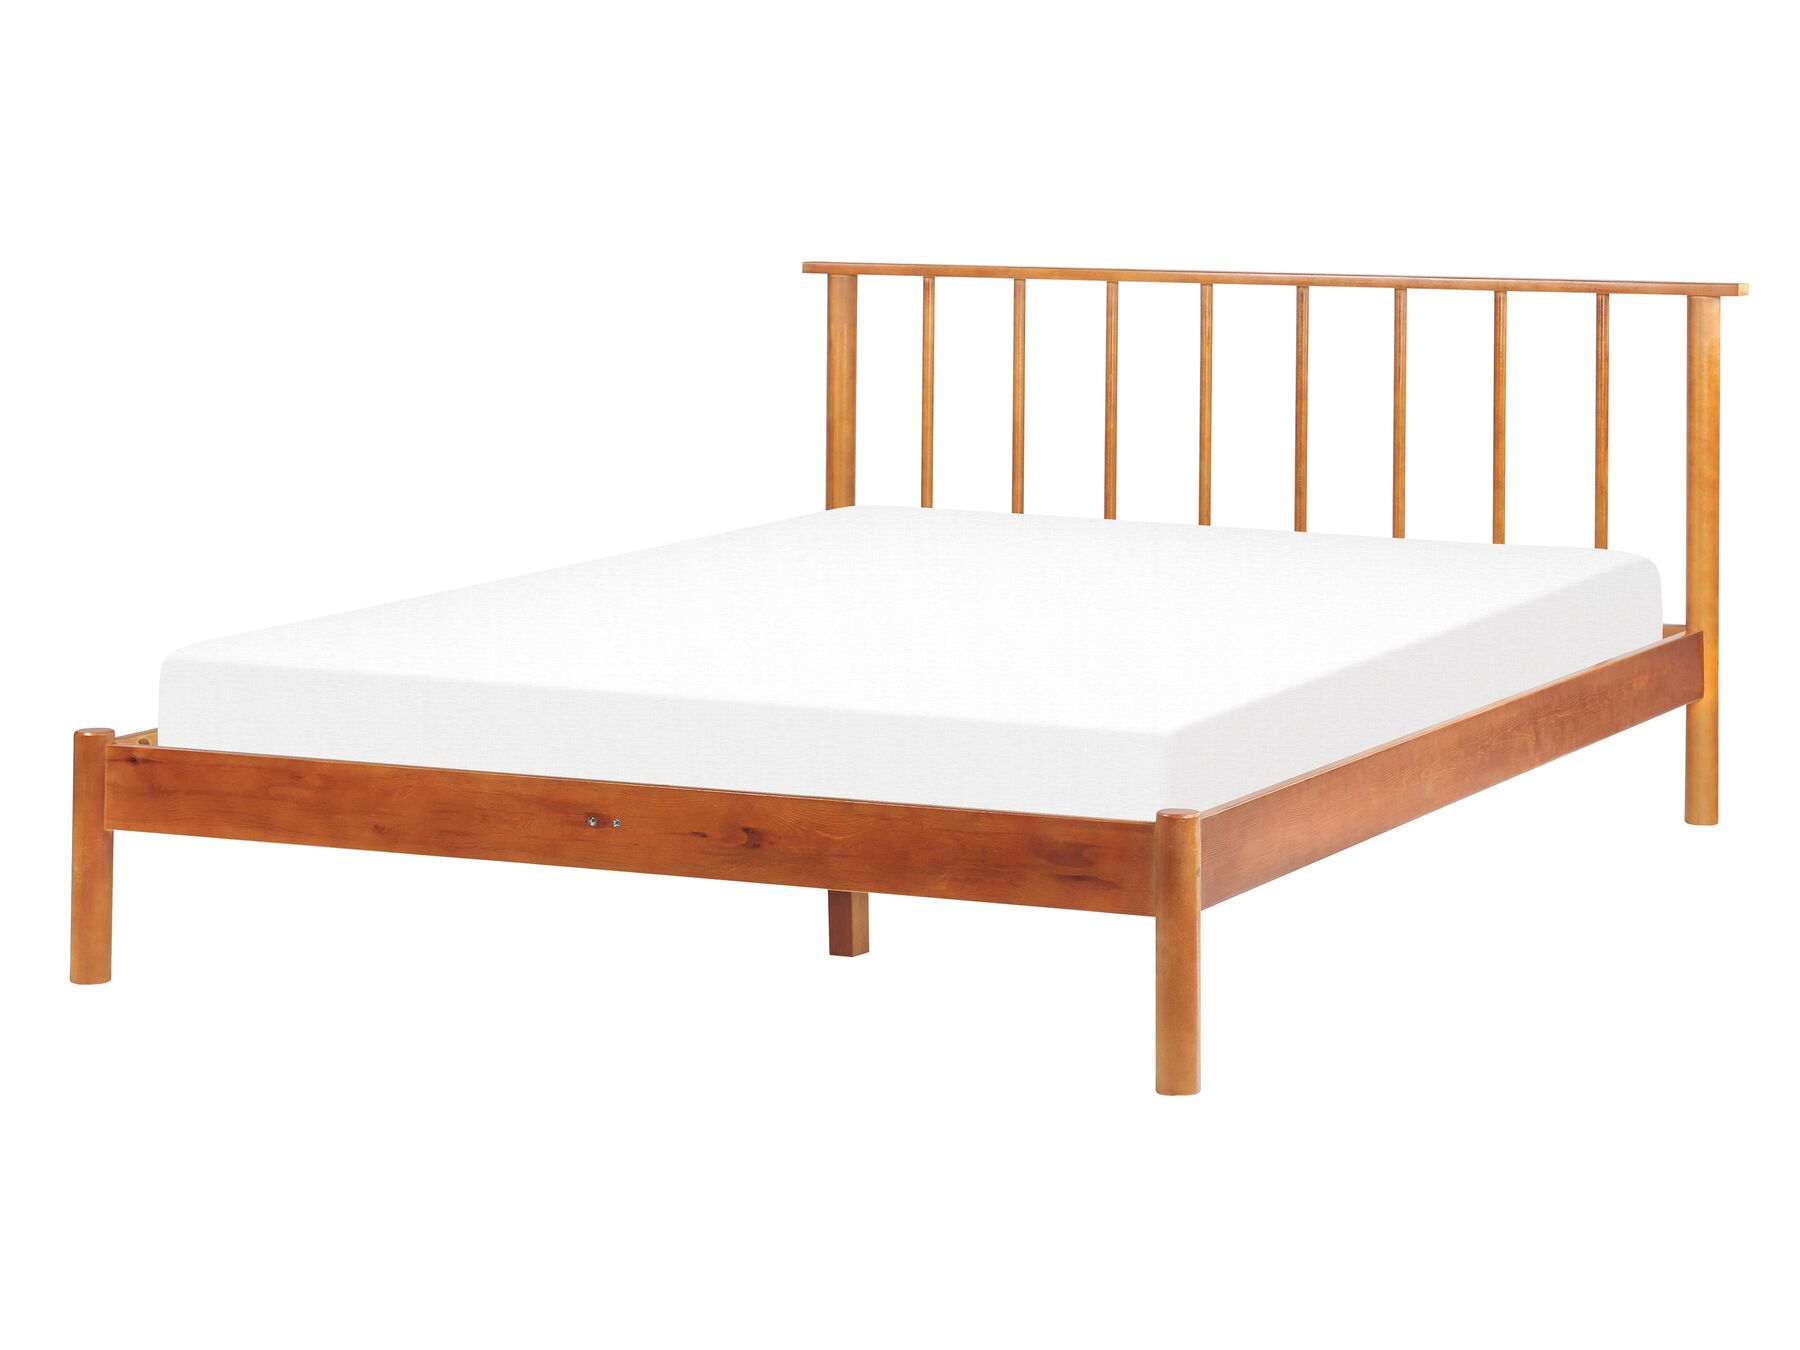 Drevená posteľ 140 x 200 cm svetlé drevo BARRET II_875127